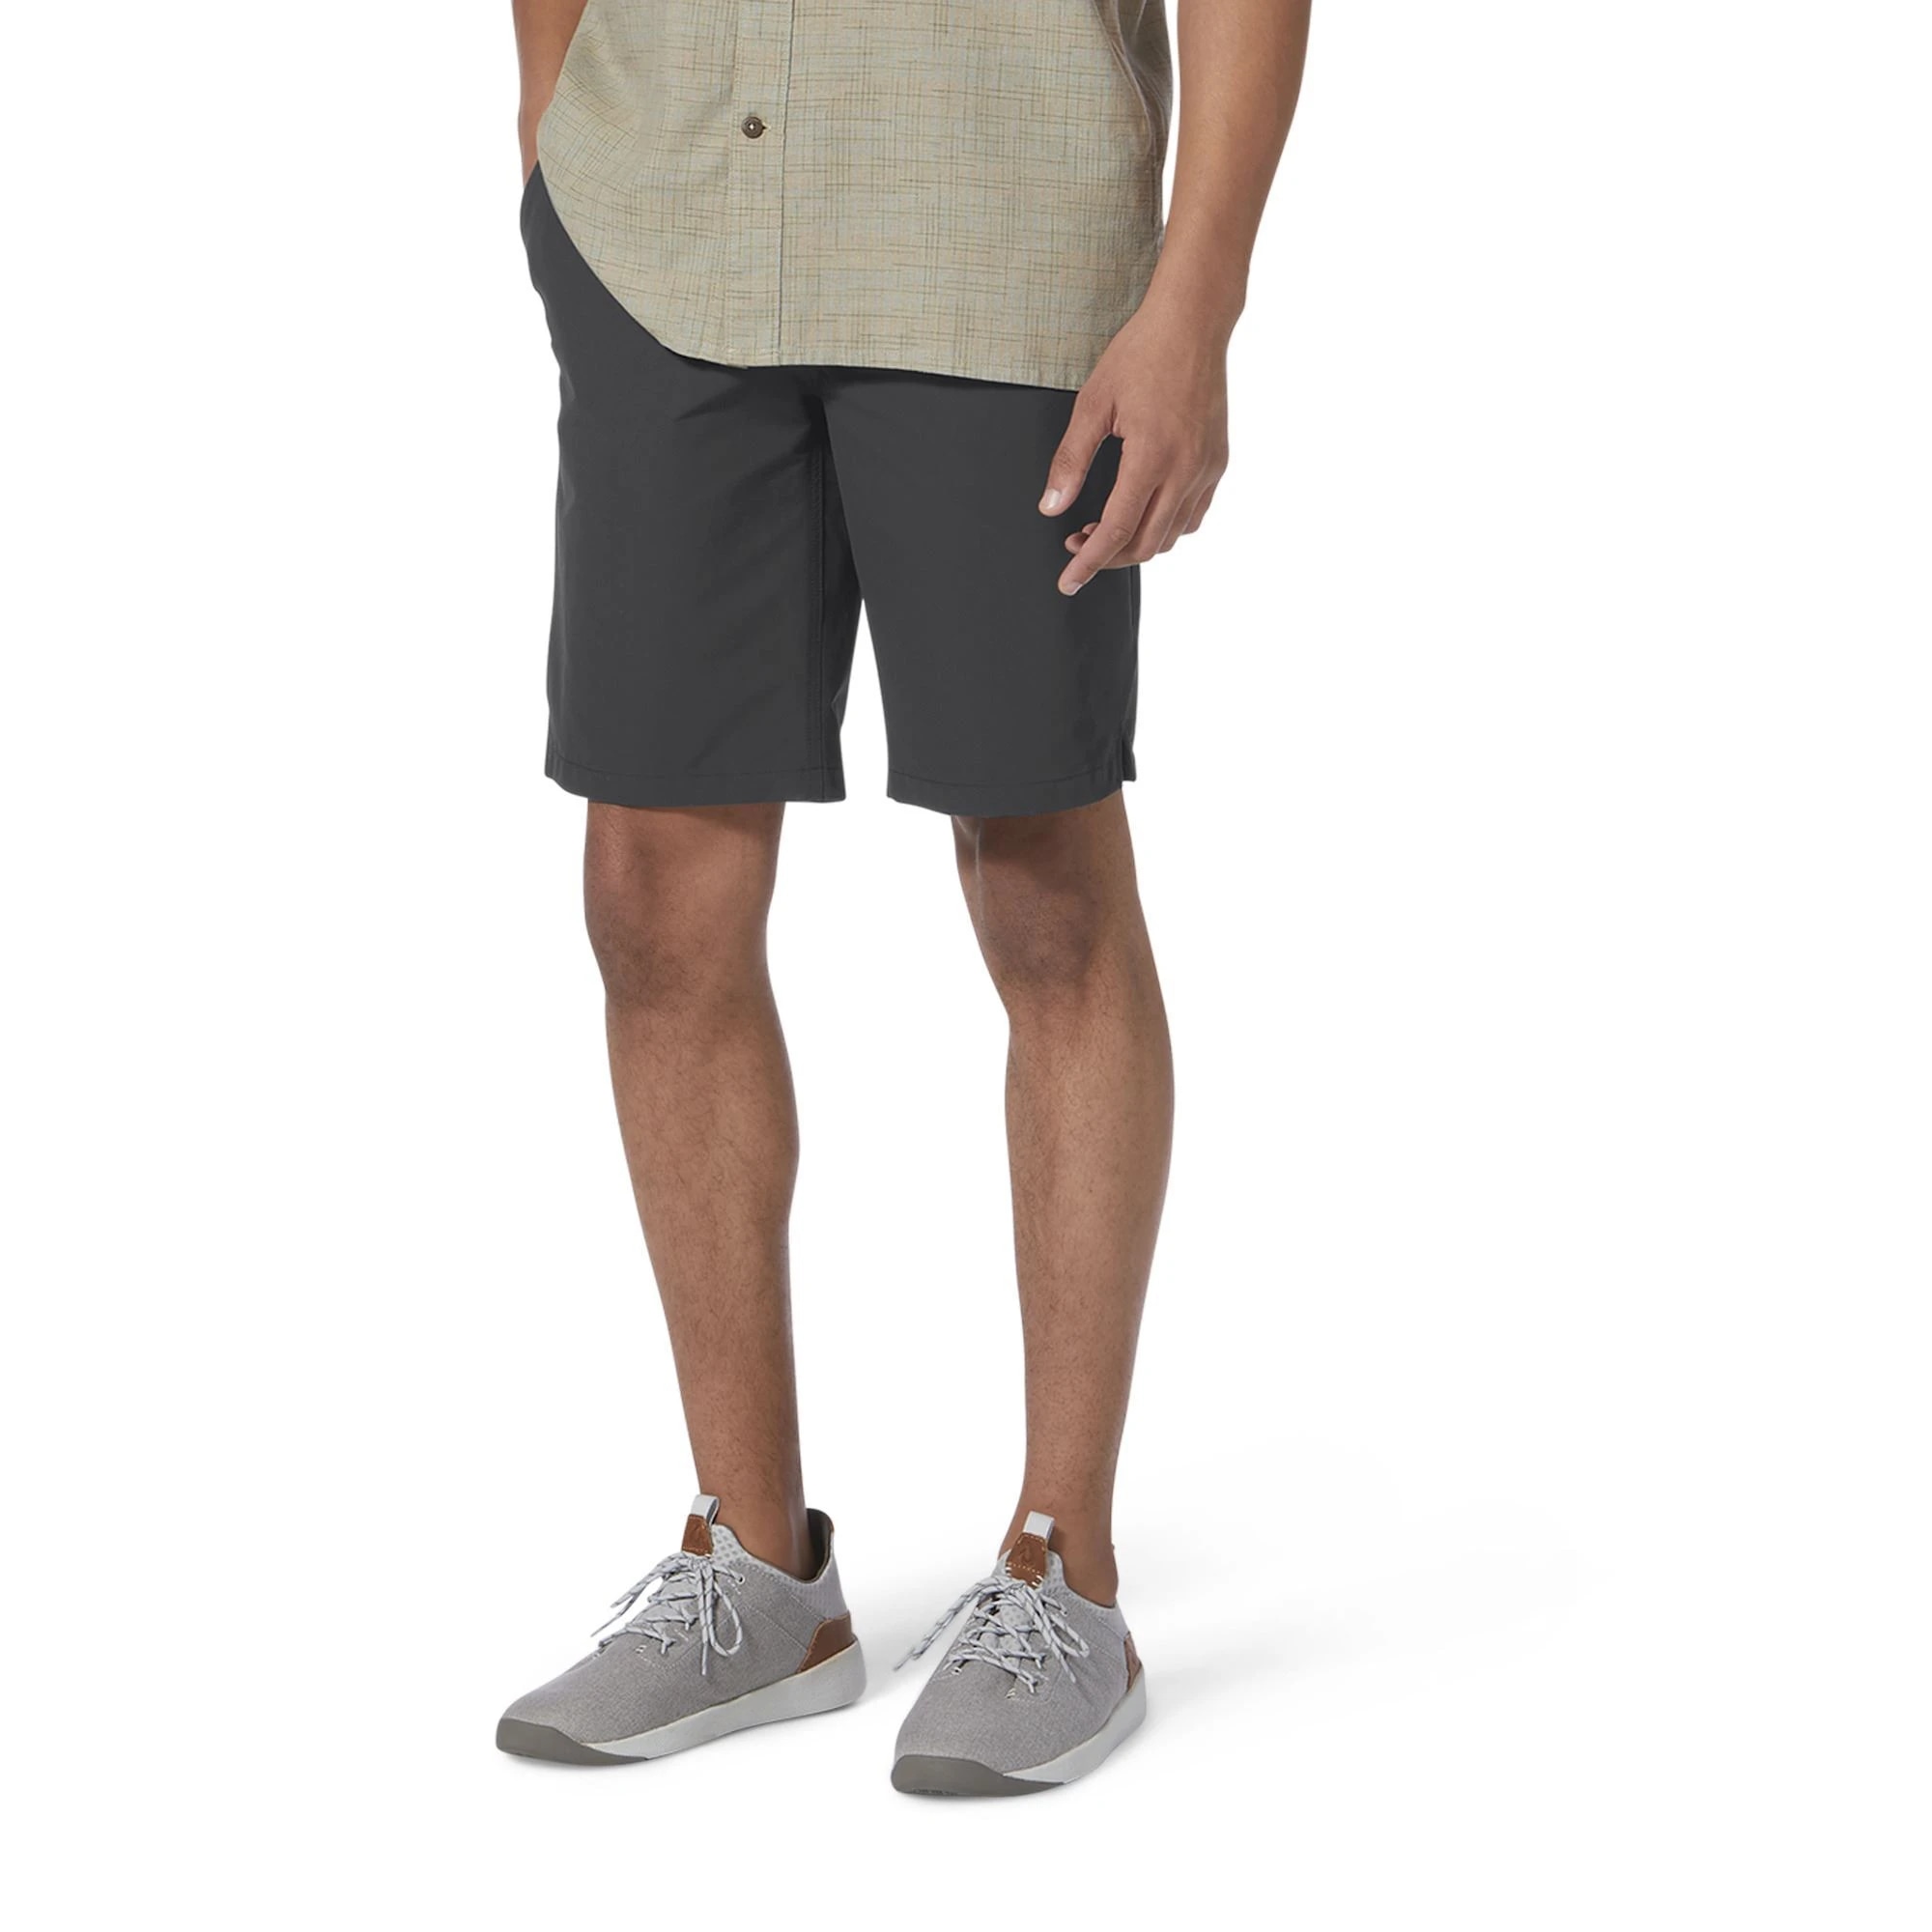 Men's Backcountry Pro Multi Shorts